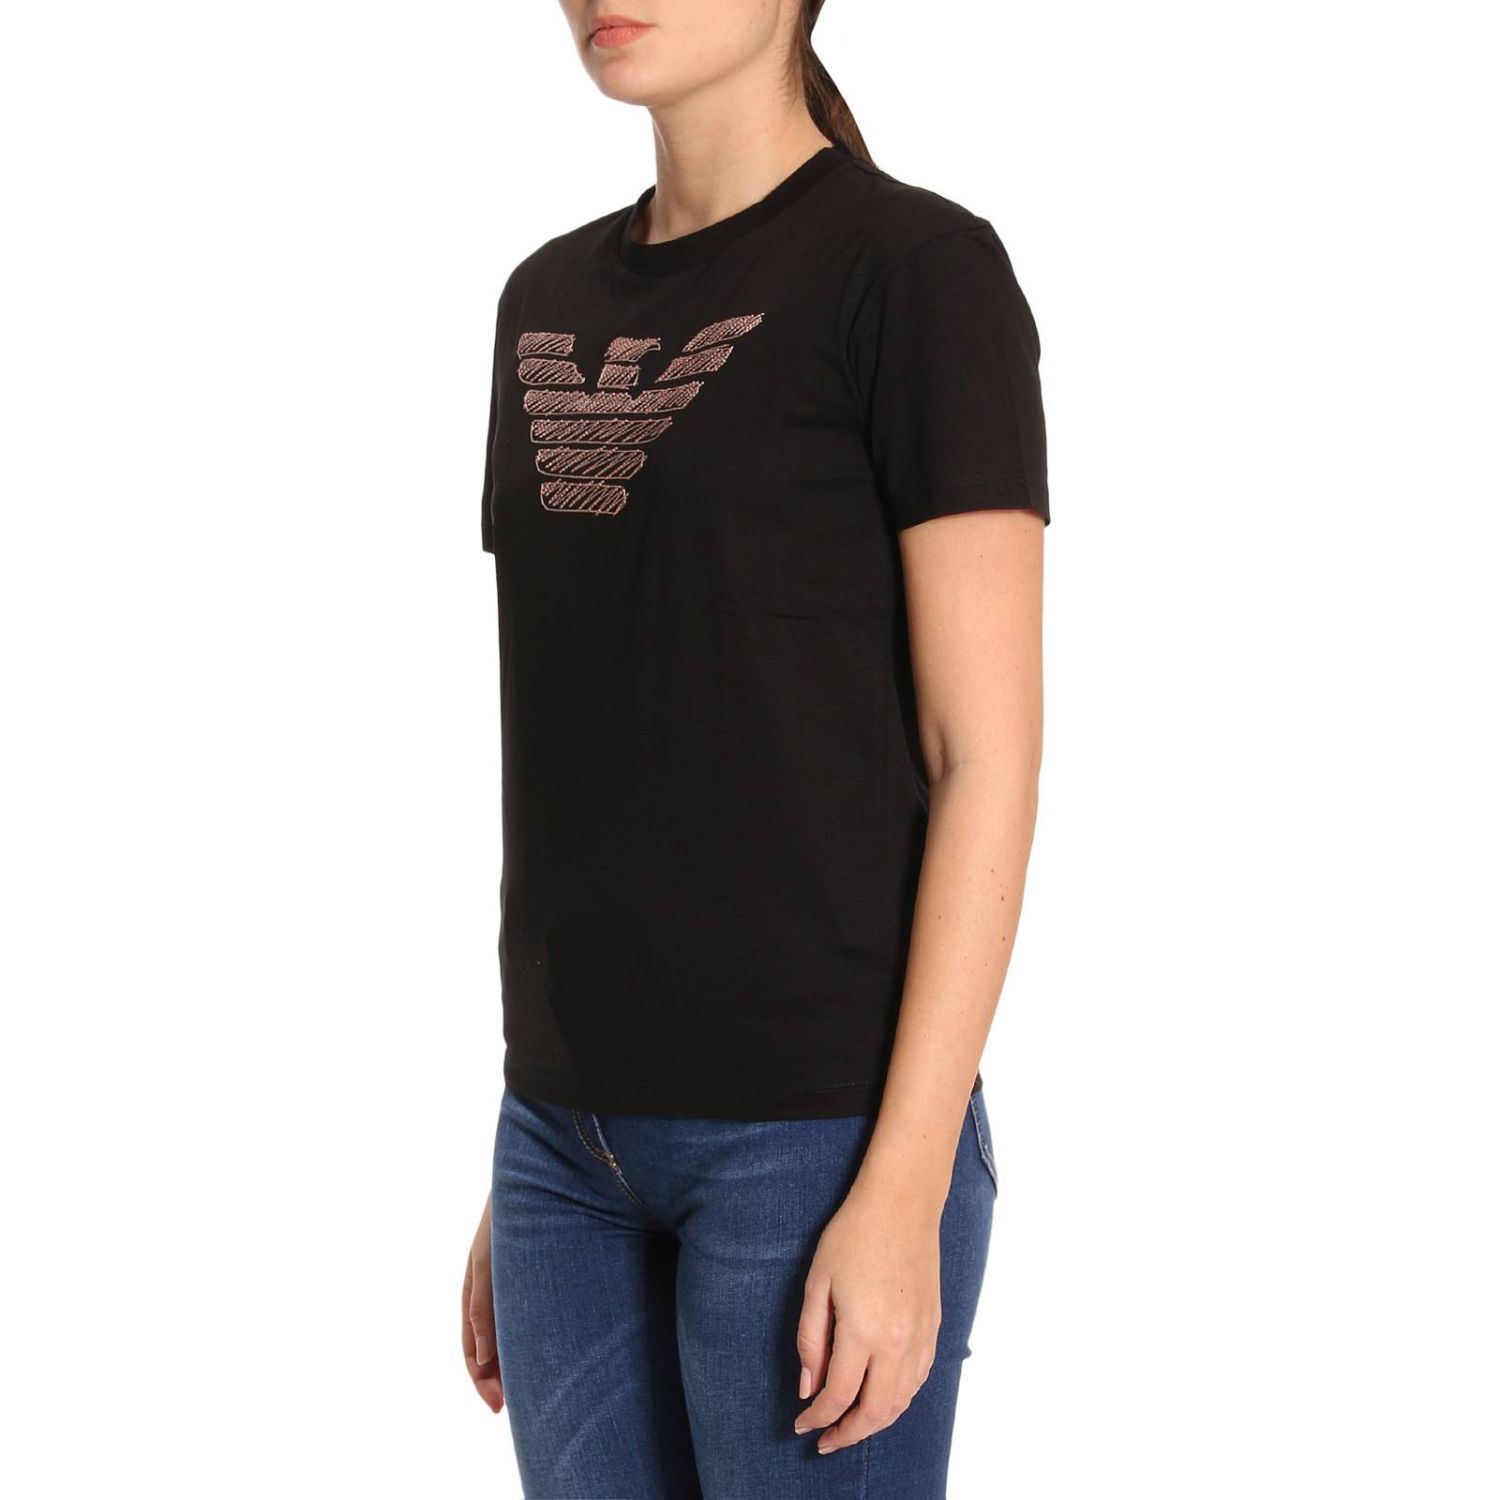 Emporio Armani Outlet: T-shirt women - Black | T-Shirt Emporio Armani ...